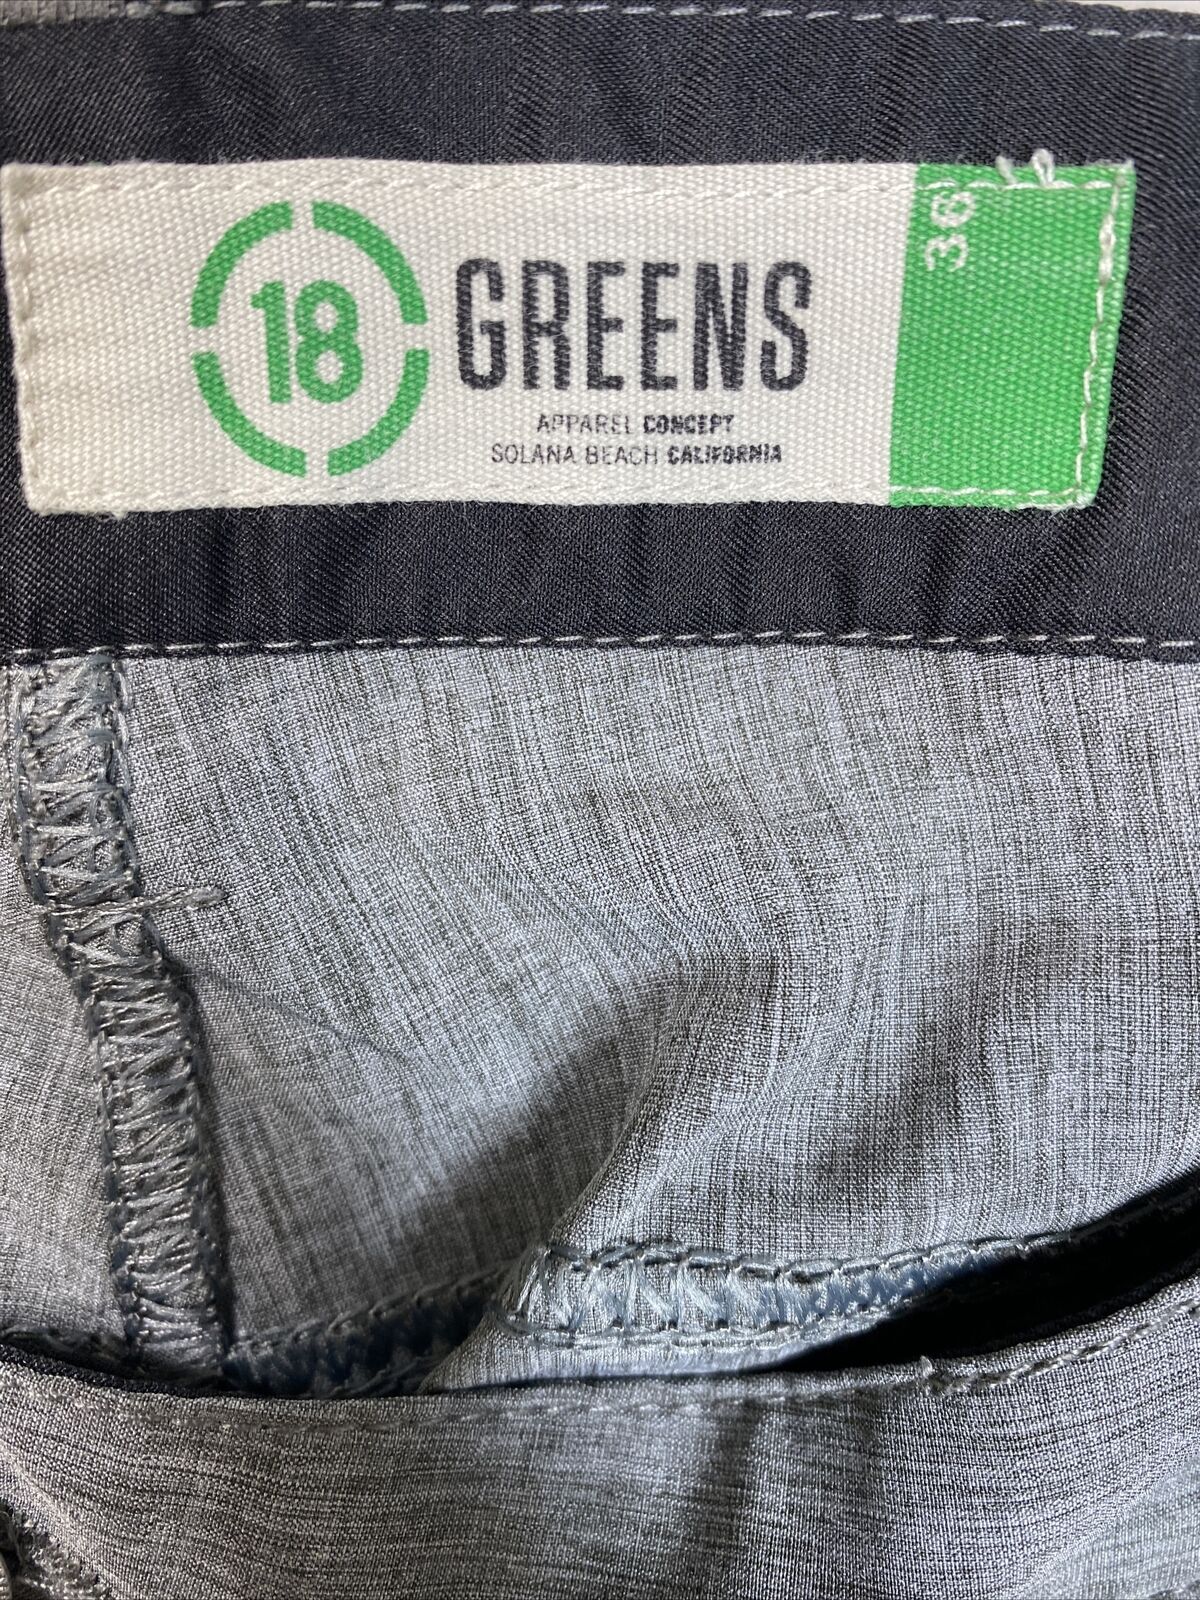 18 Greens Men's Gray Lightweight Polyester Activewear Pants Sz 36